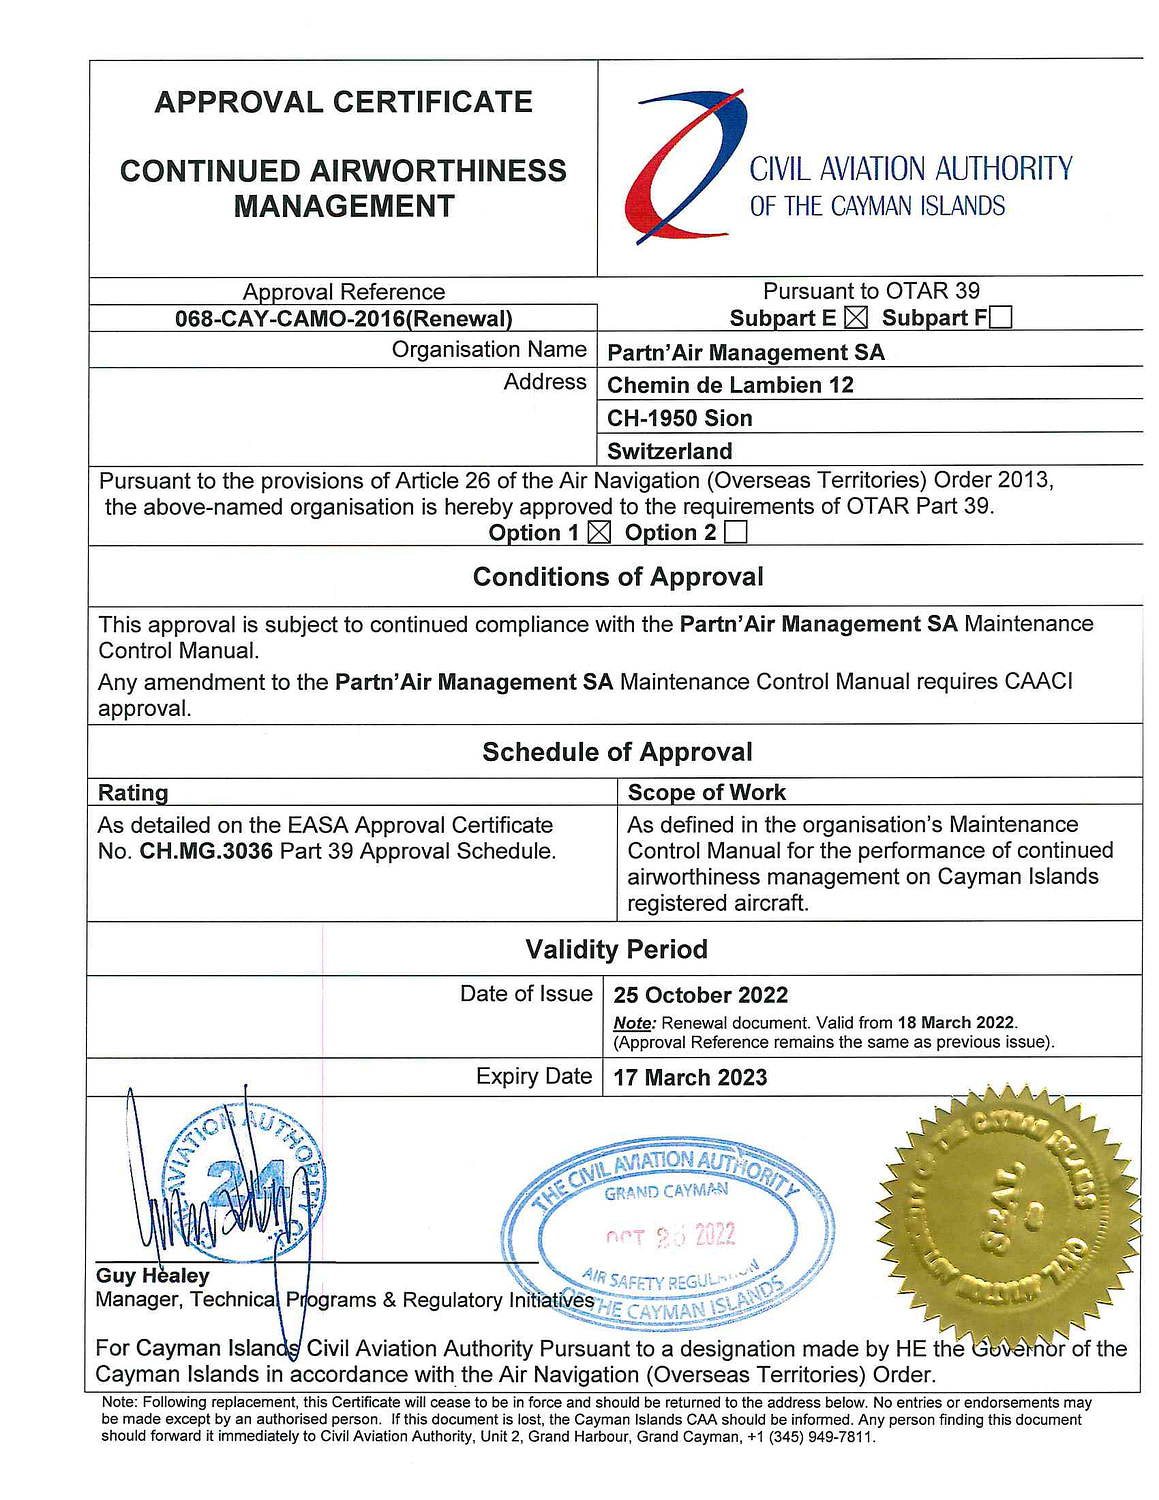 CAMO Certificate - Partn'Air